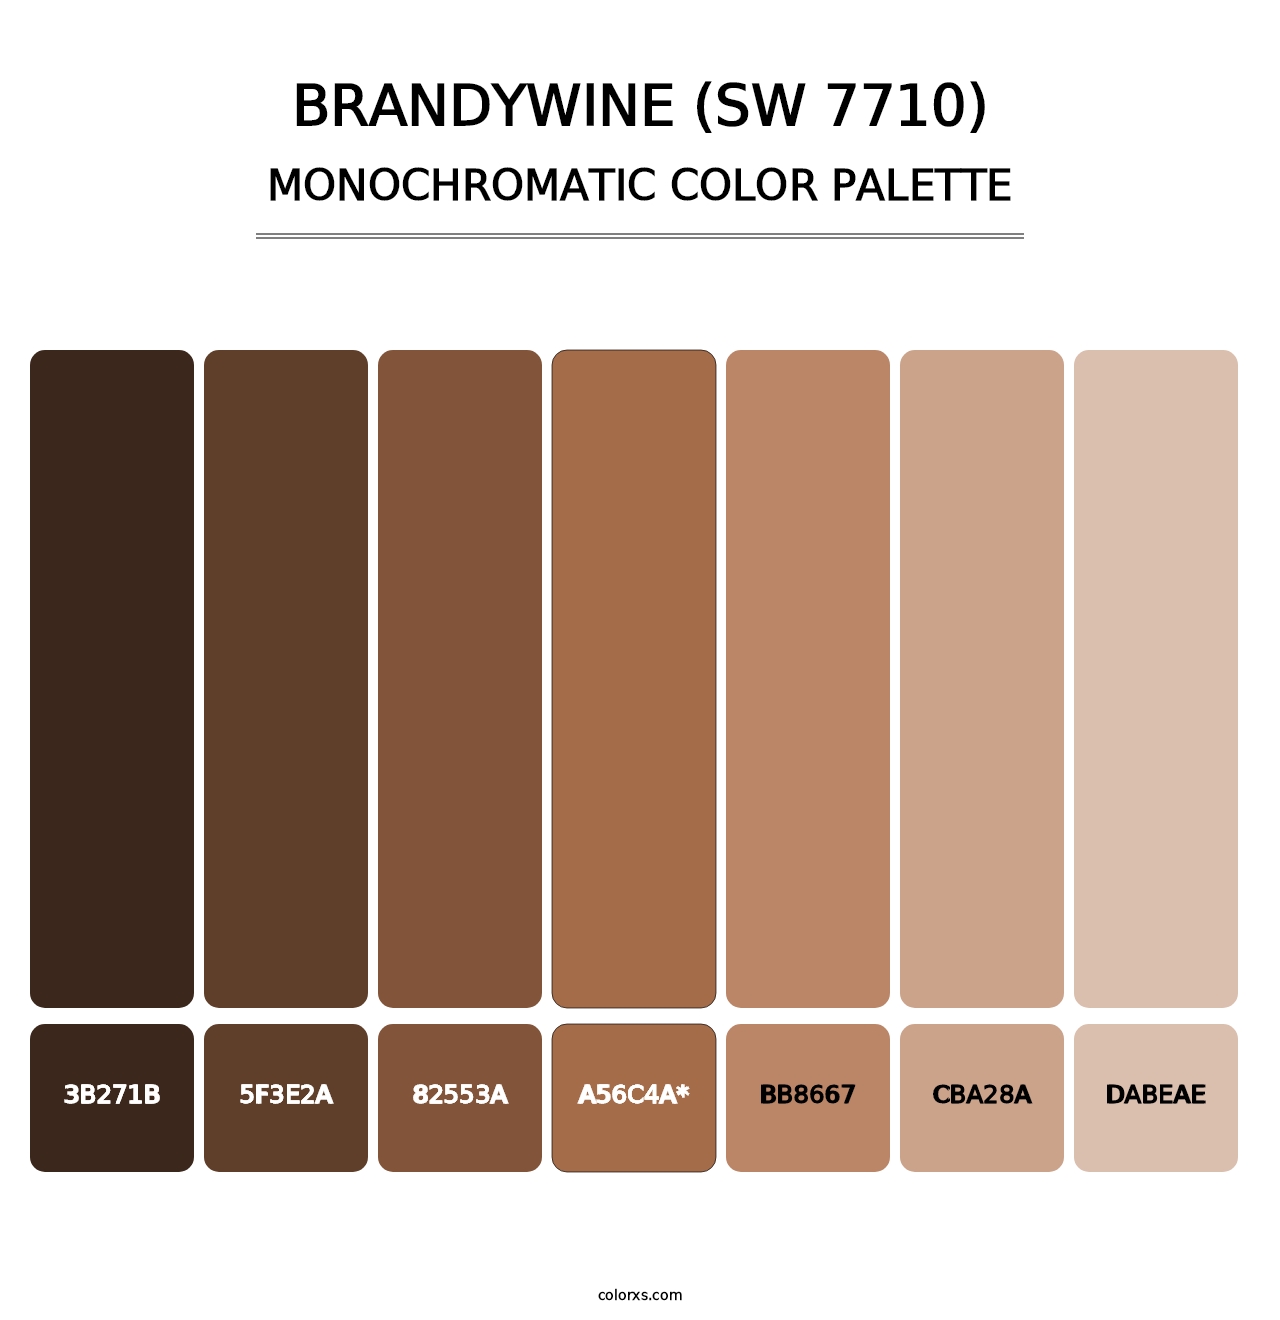 Brandywine (SW 7710) - Monochromatic Color Palette